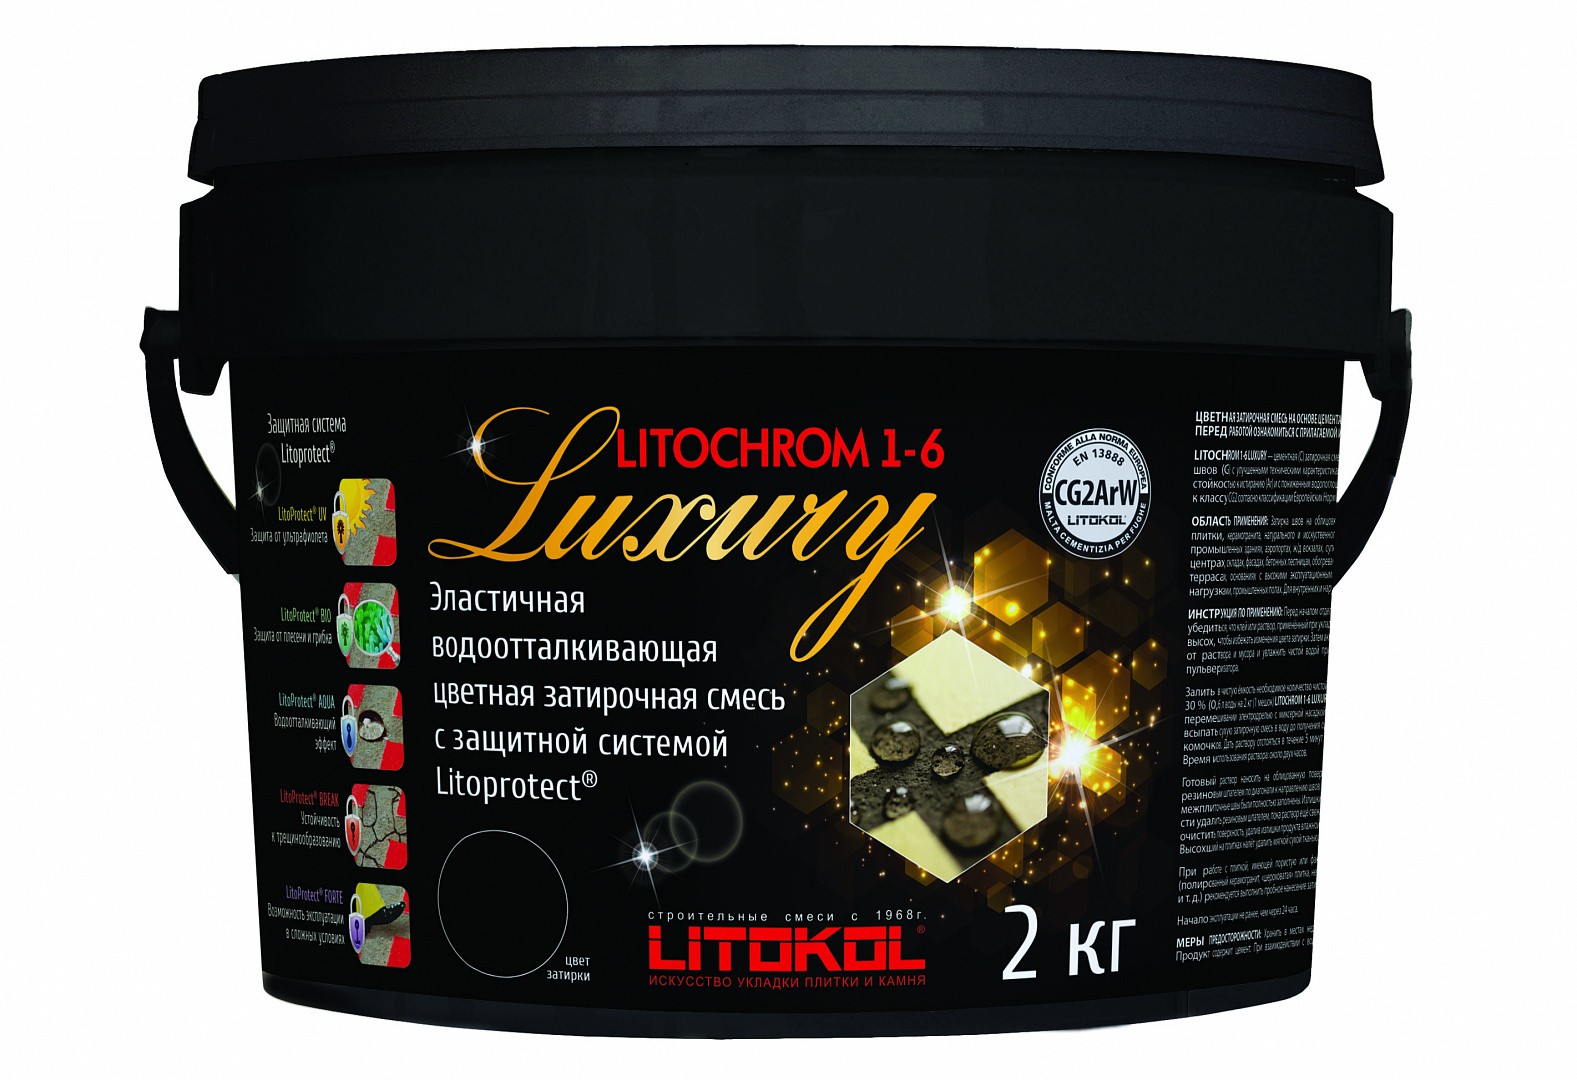 Цементная затирочная смесь LITOCHROM 1-6 LUXURY C.70